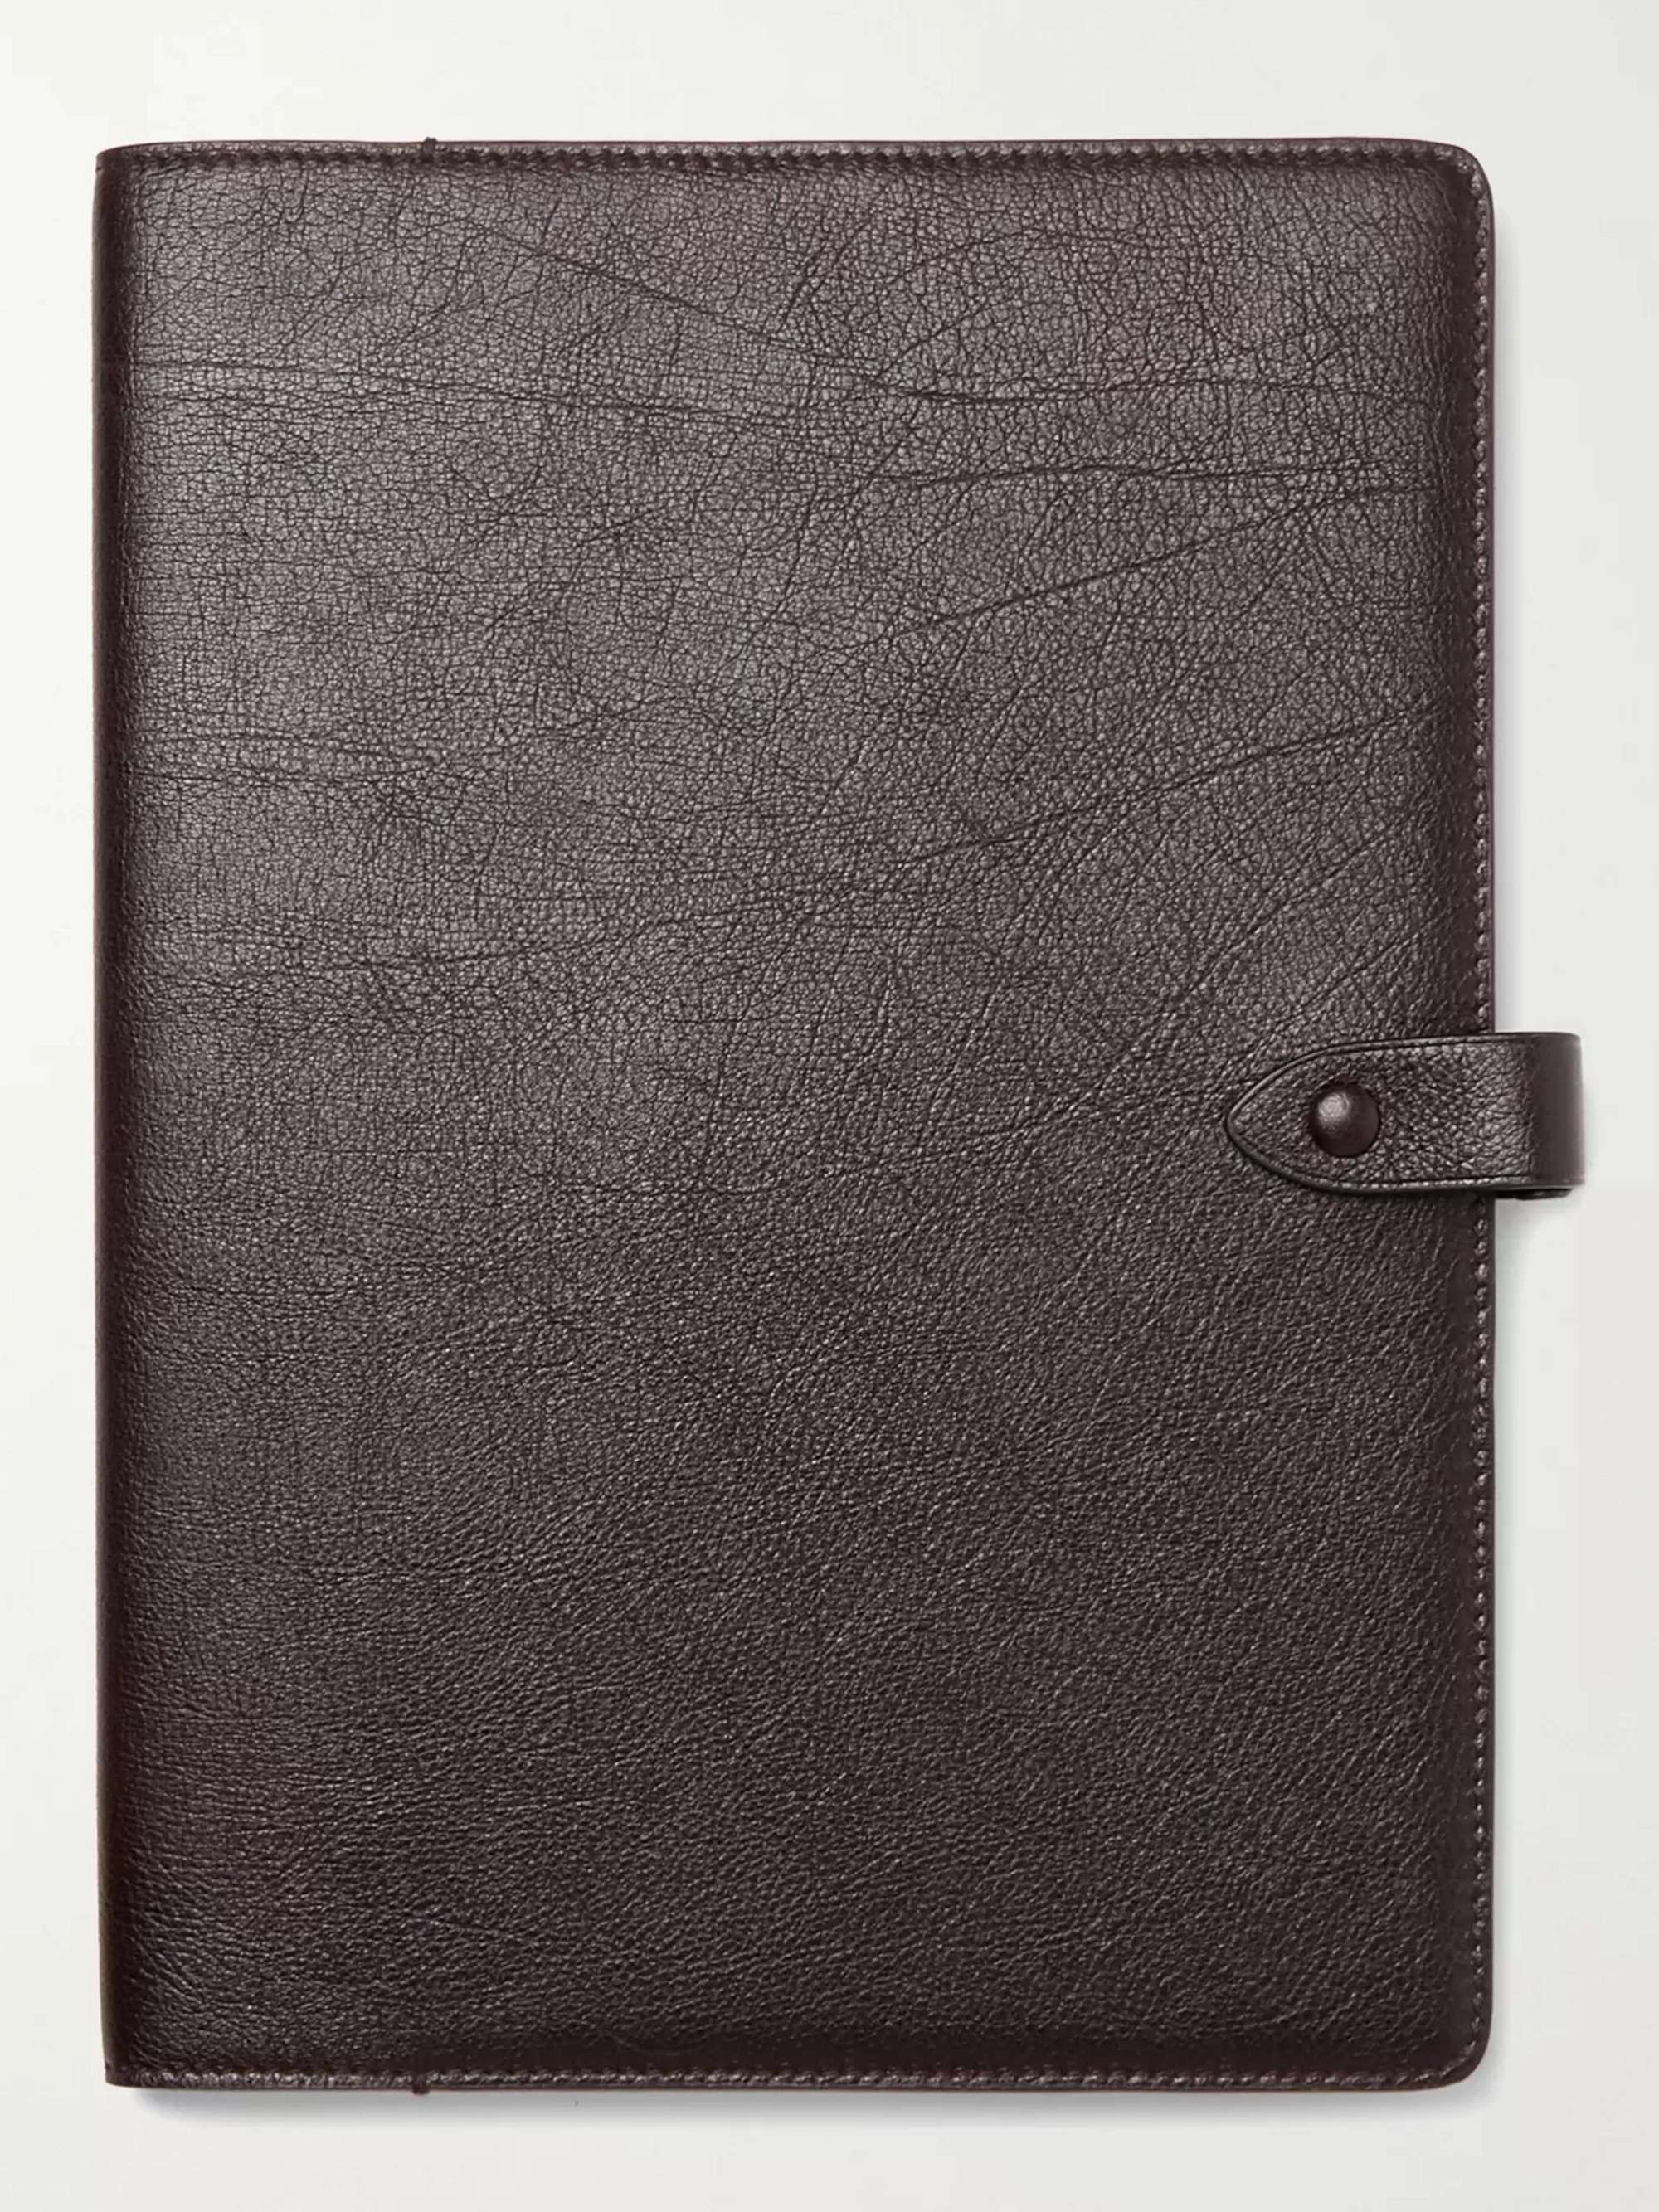 MÉTIER Full-Grain Leather Notebook